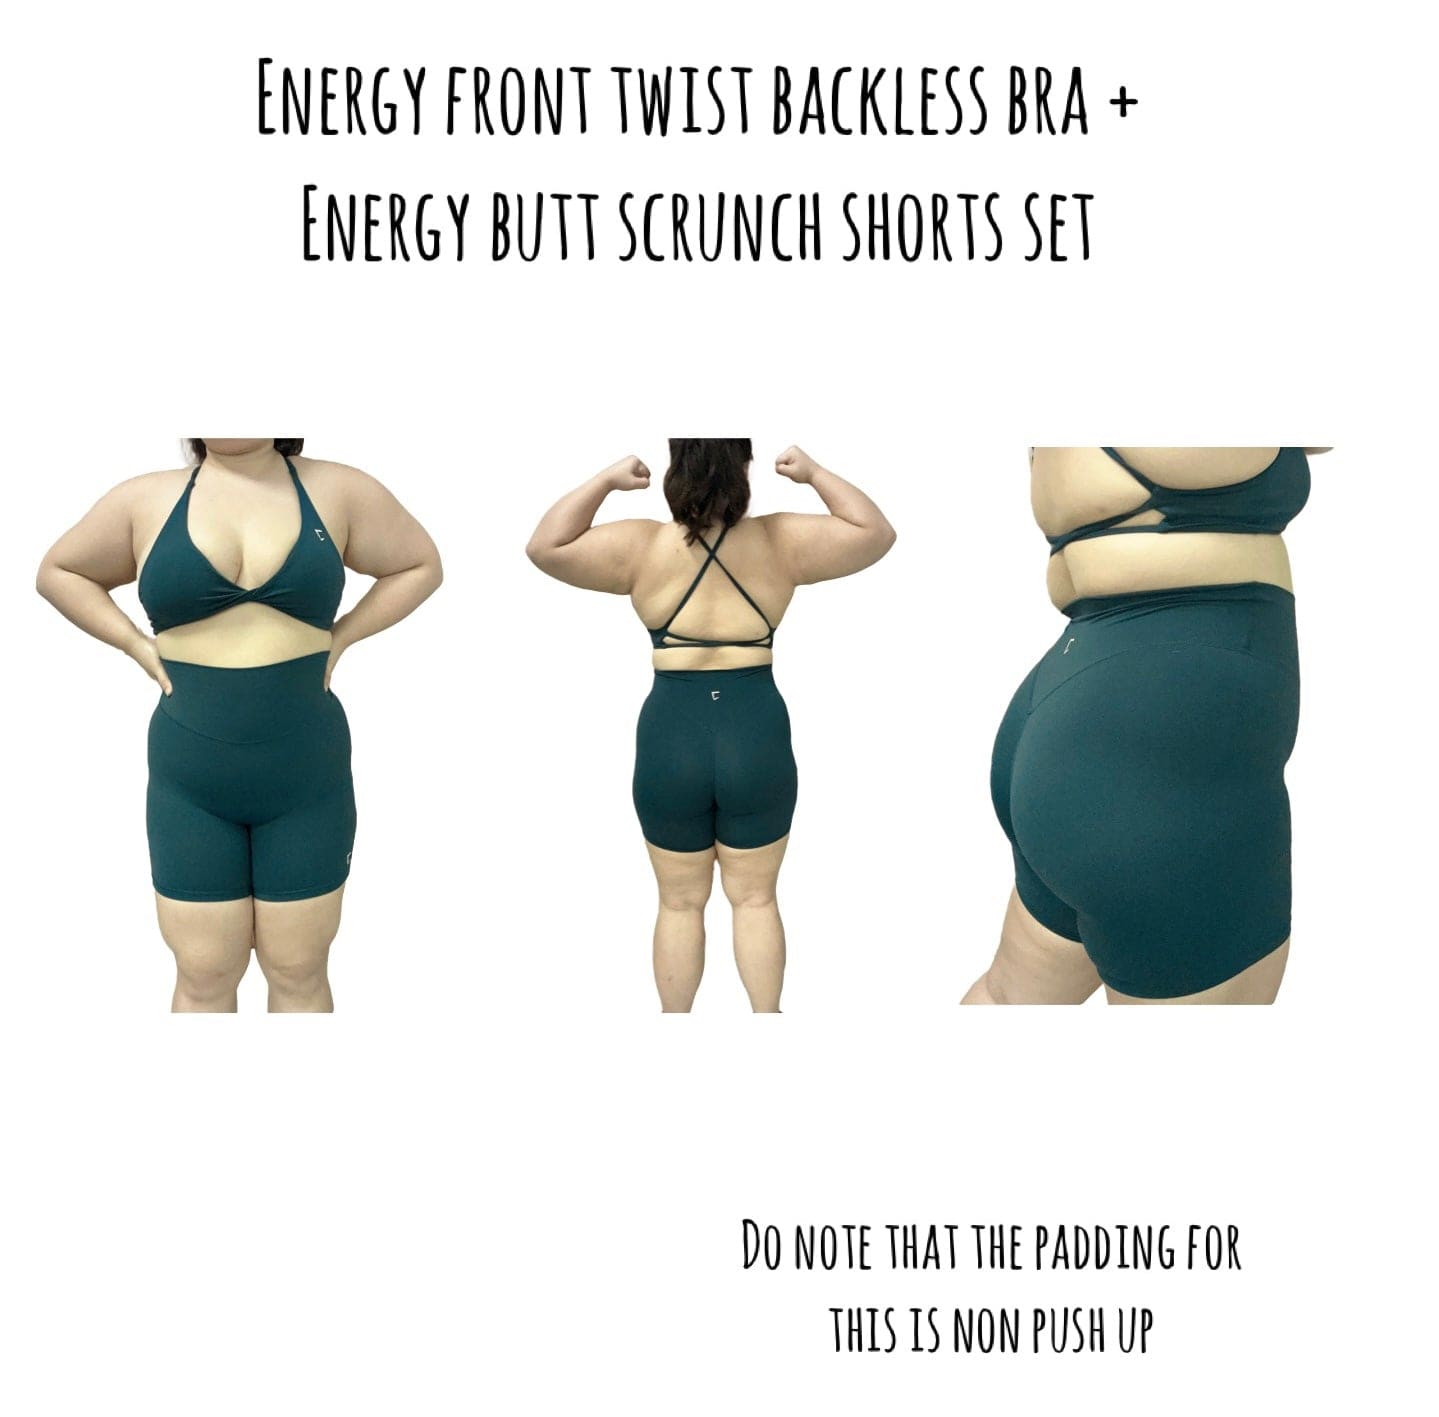 Energy front twist backless bra (non push up padding) inner scrunch shorts set